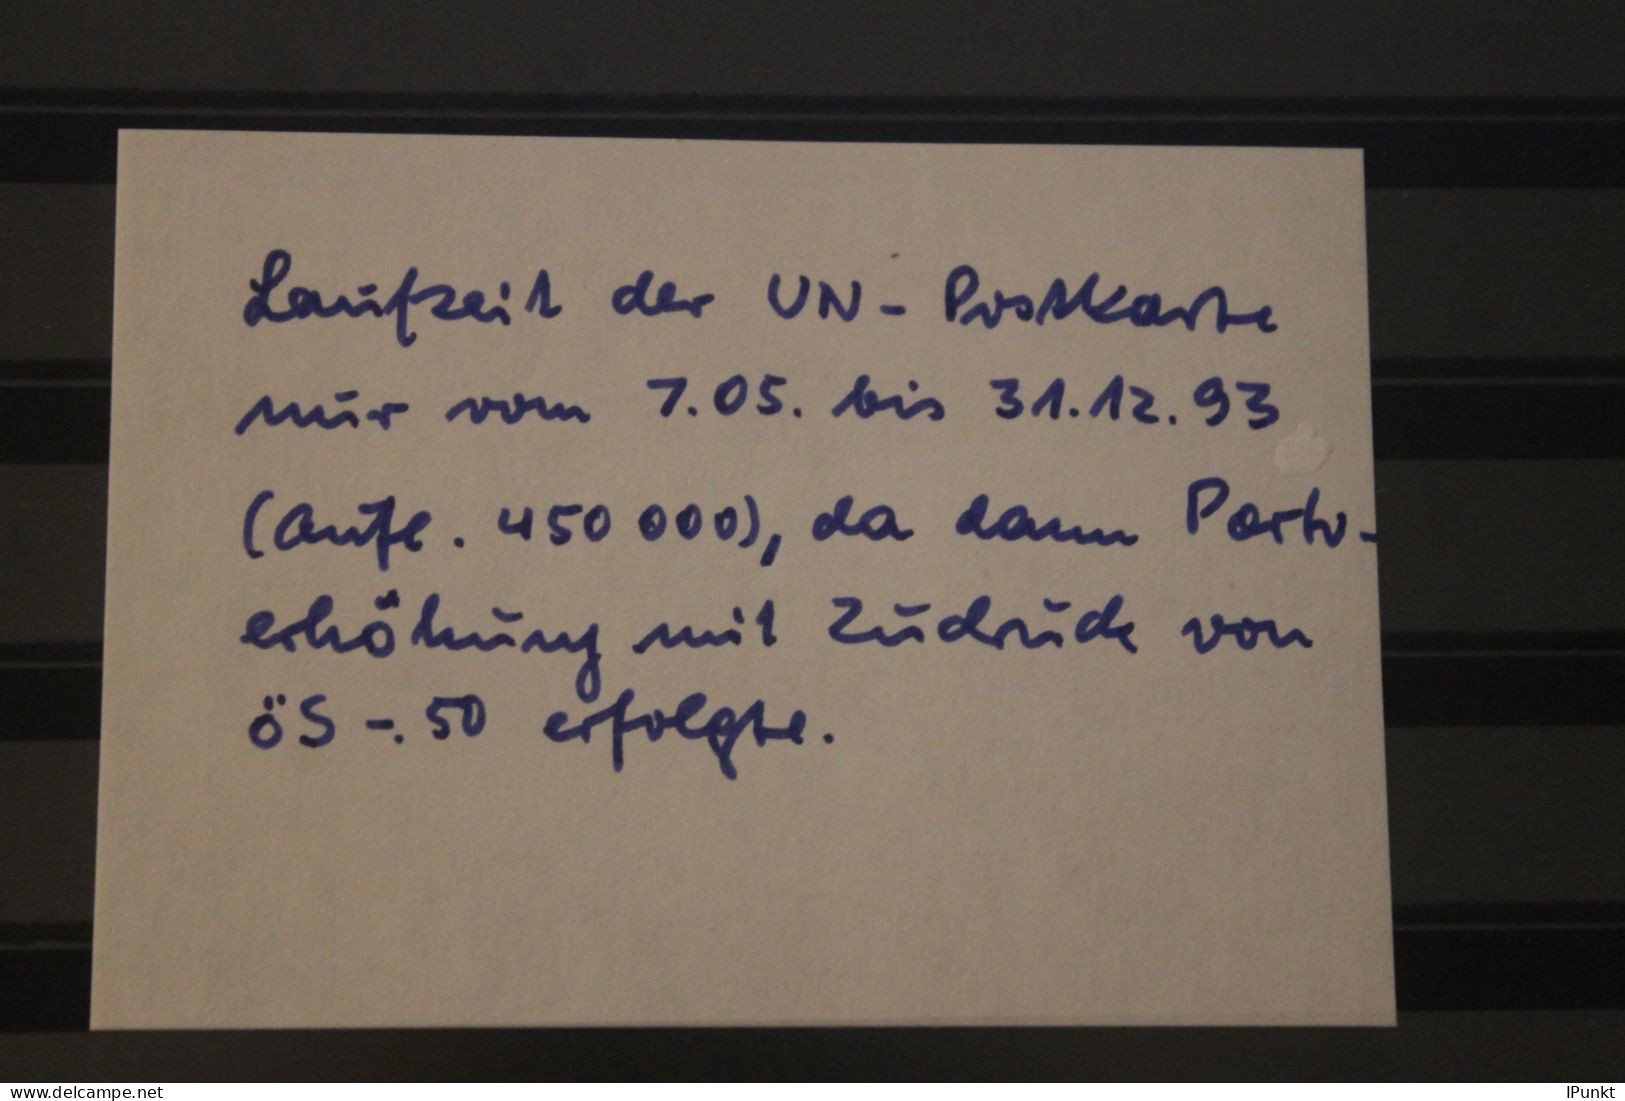 UN; UNO Wien 1993, Ganzsache; Gestempelt Selten, Lesen - Lettres & Documents